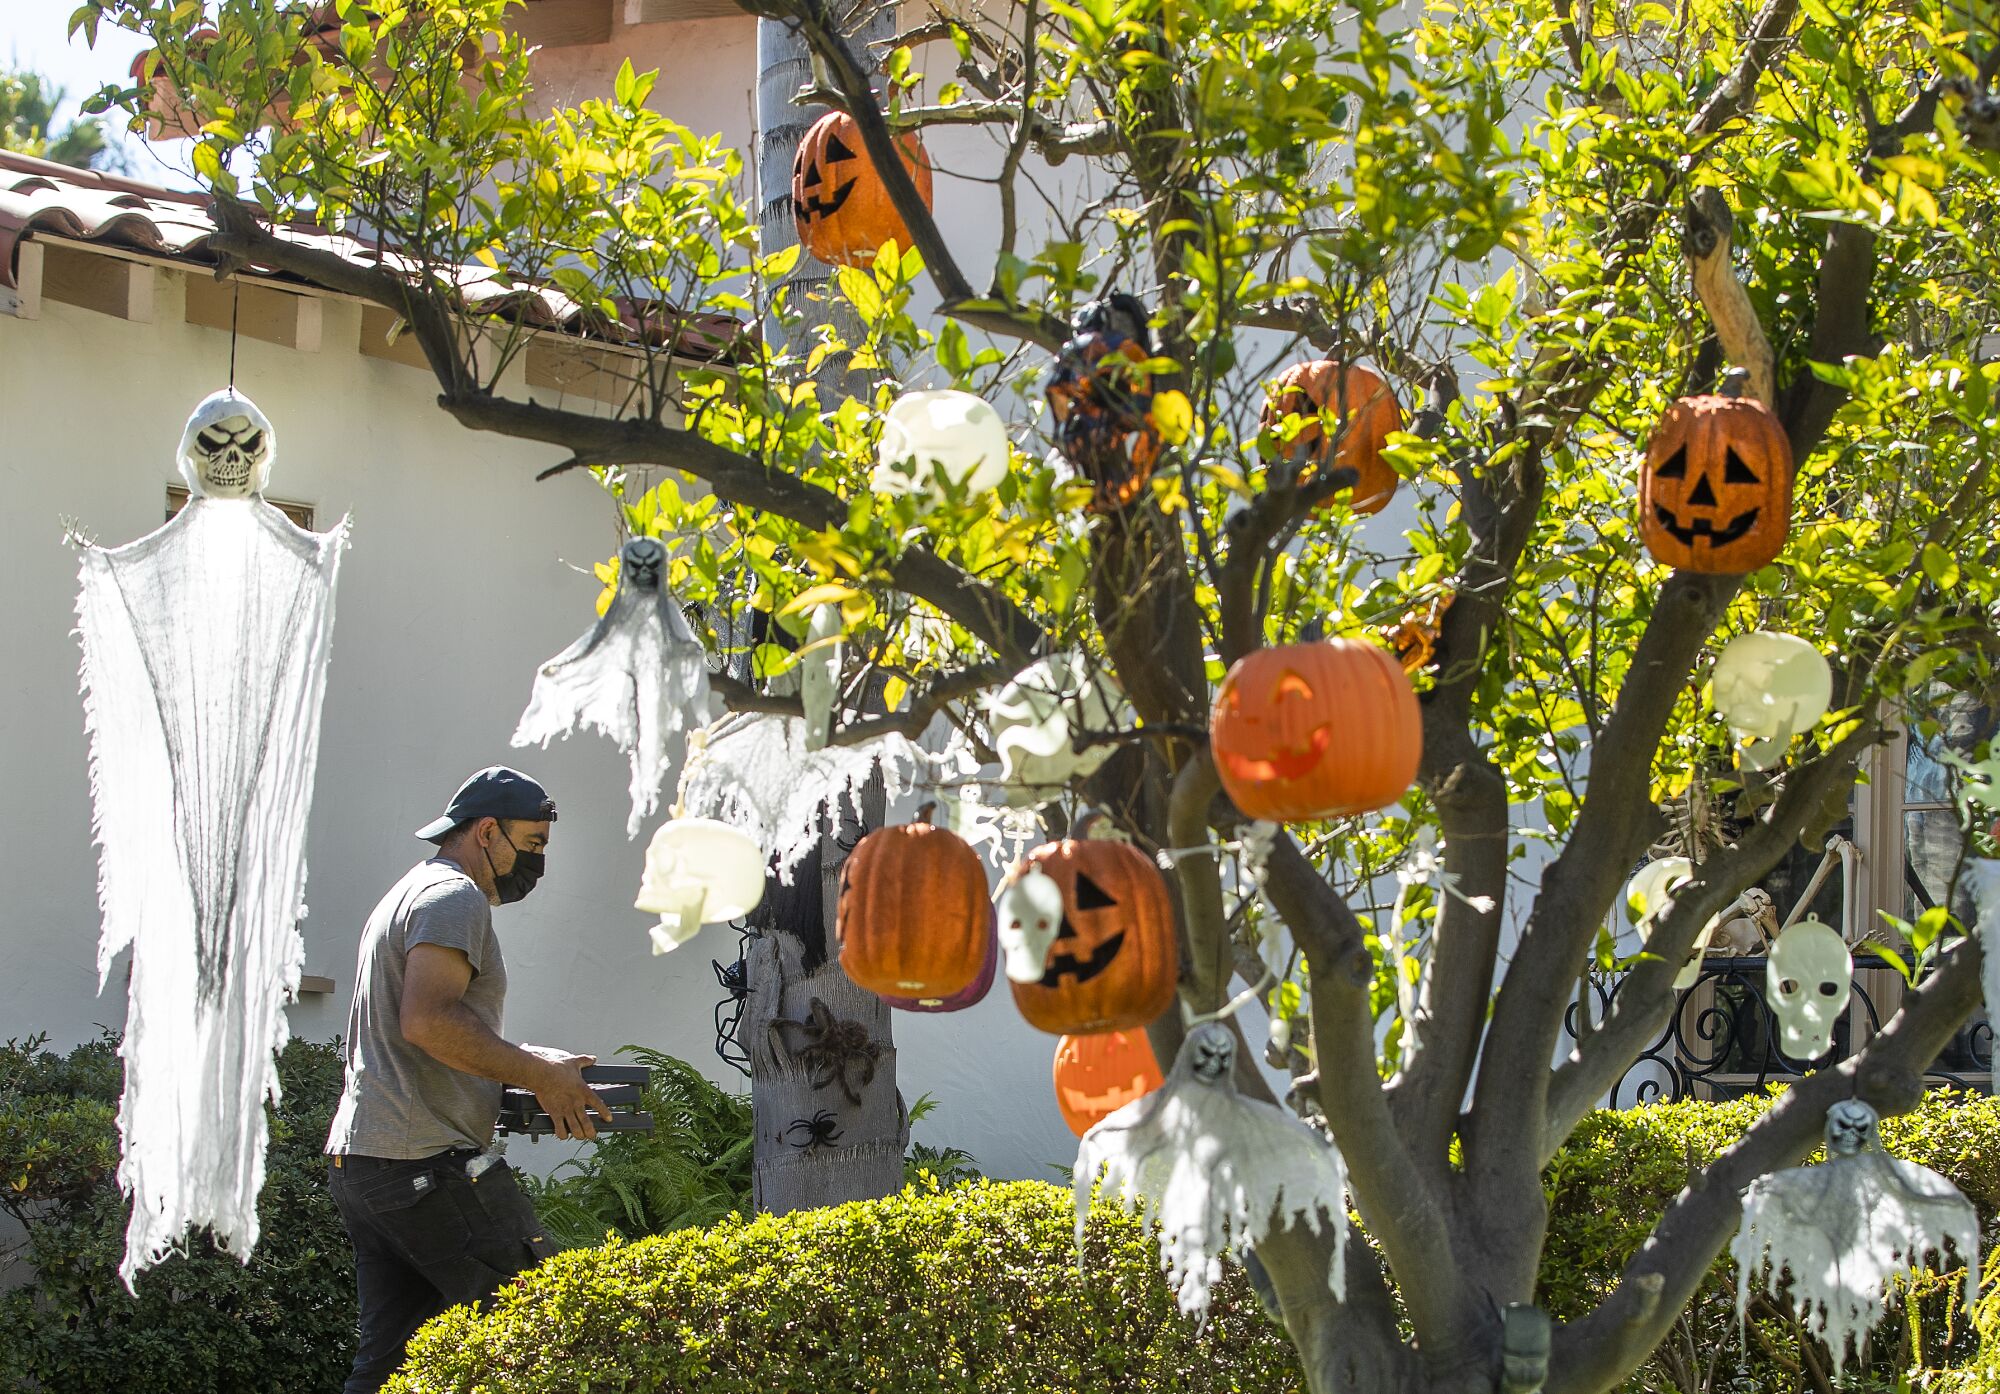 Cesar De La Cruz, a kitchen appliance installer, makes his way past a tree decorated for Halloween